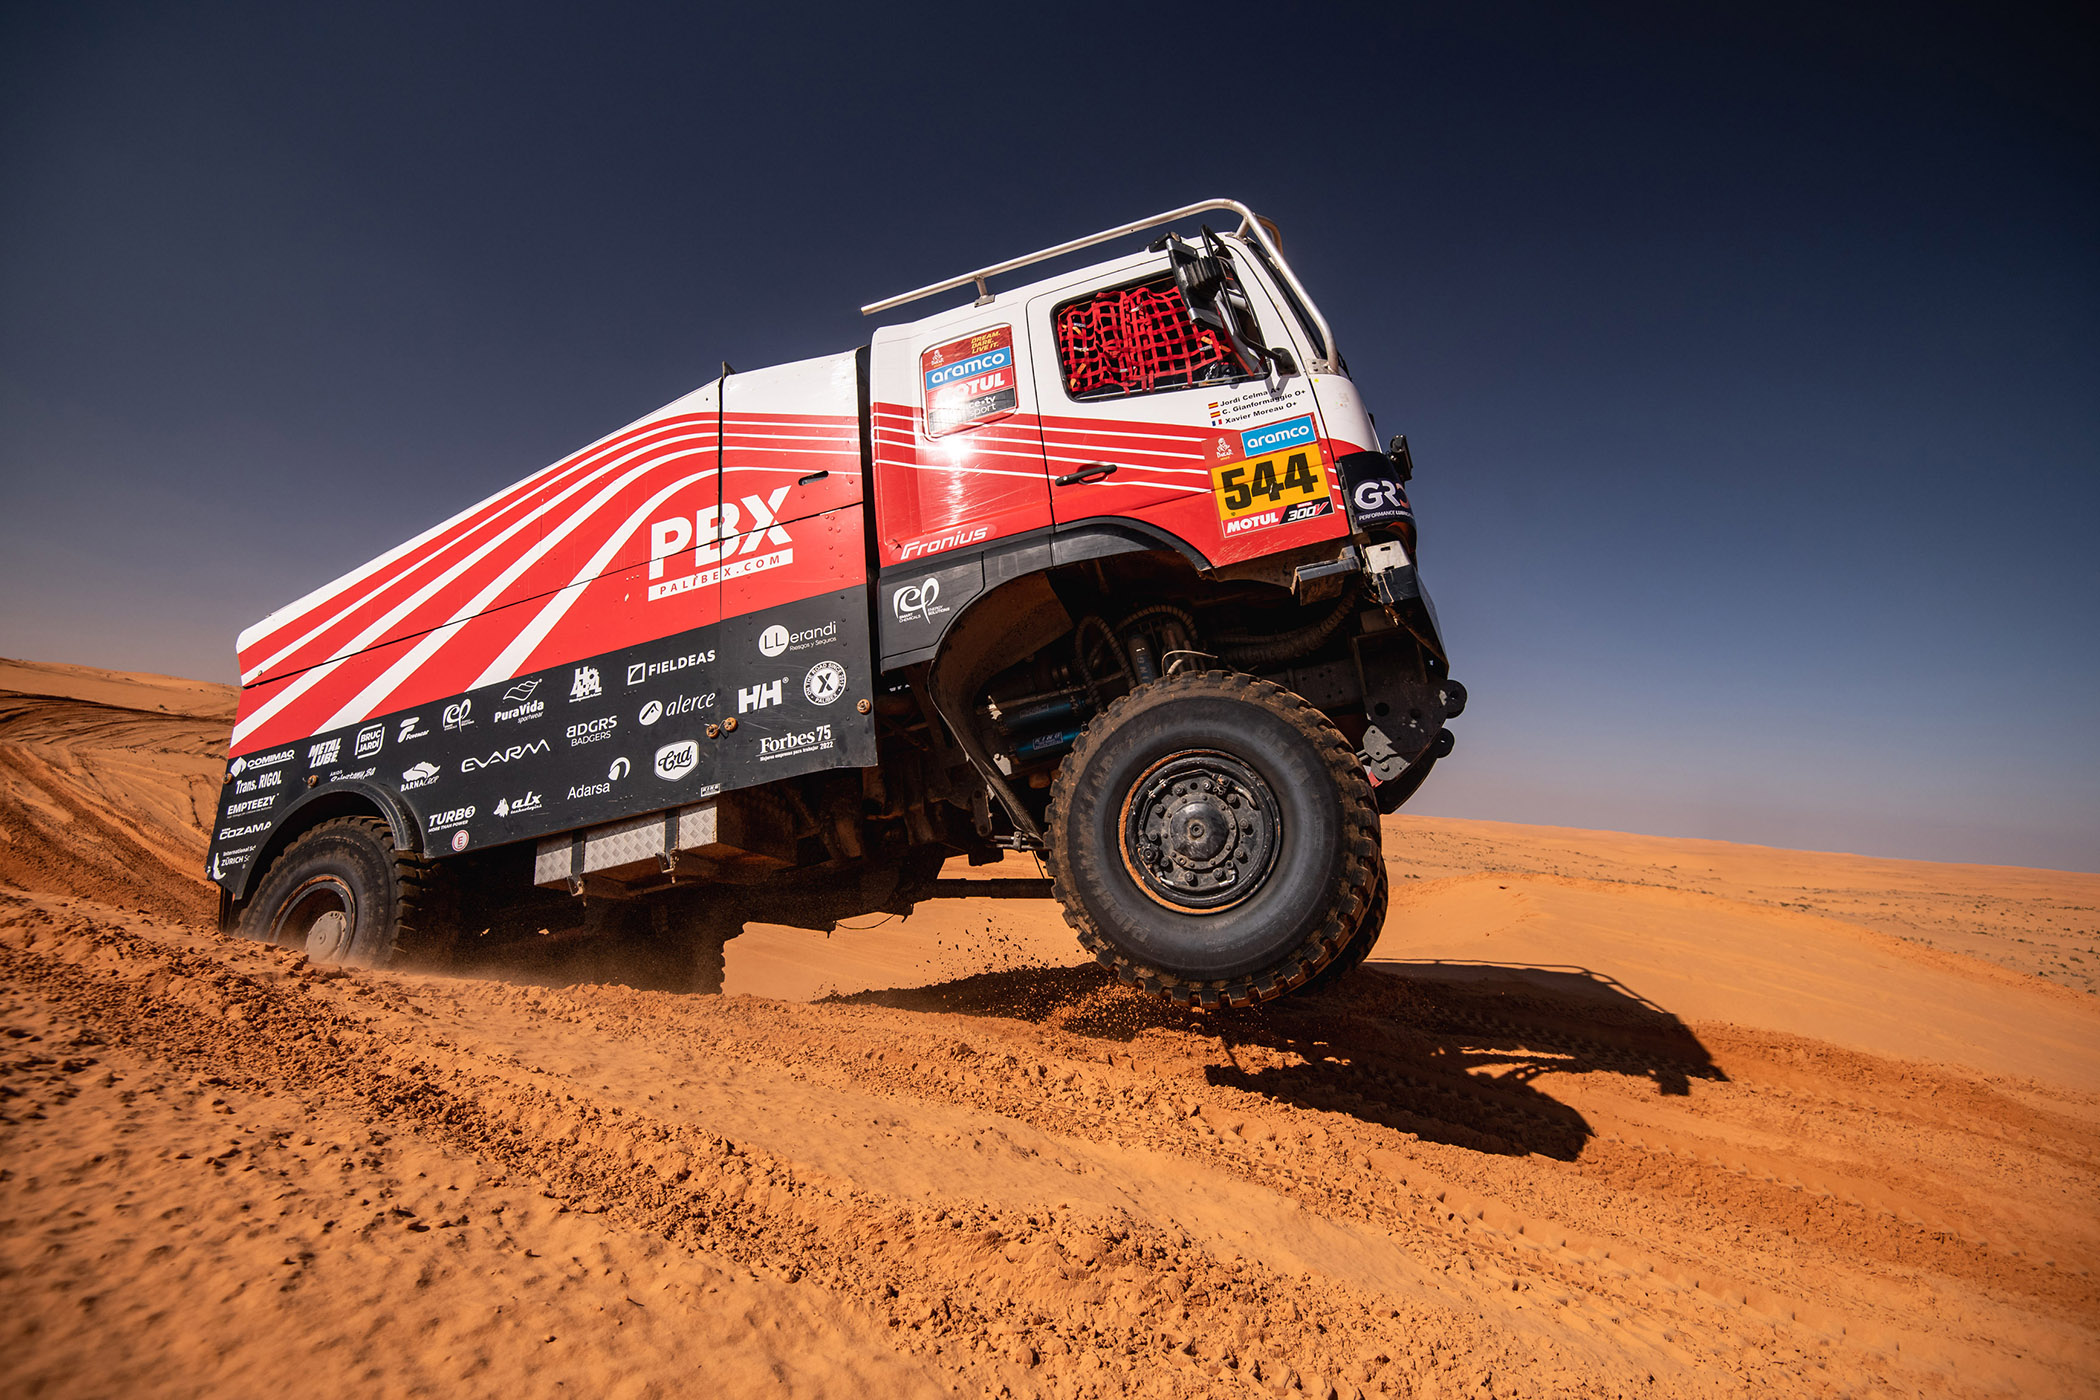 medalla brandor - PBX Dakar Team- BEUSUAL - camion dakar (12)